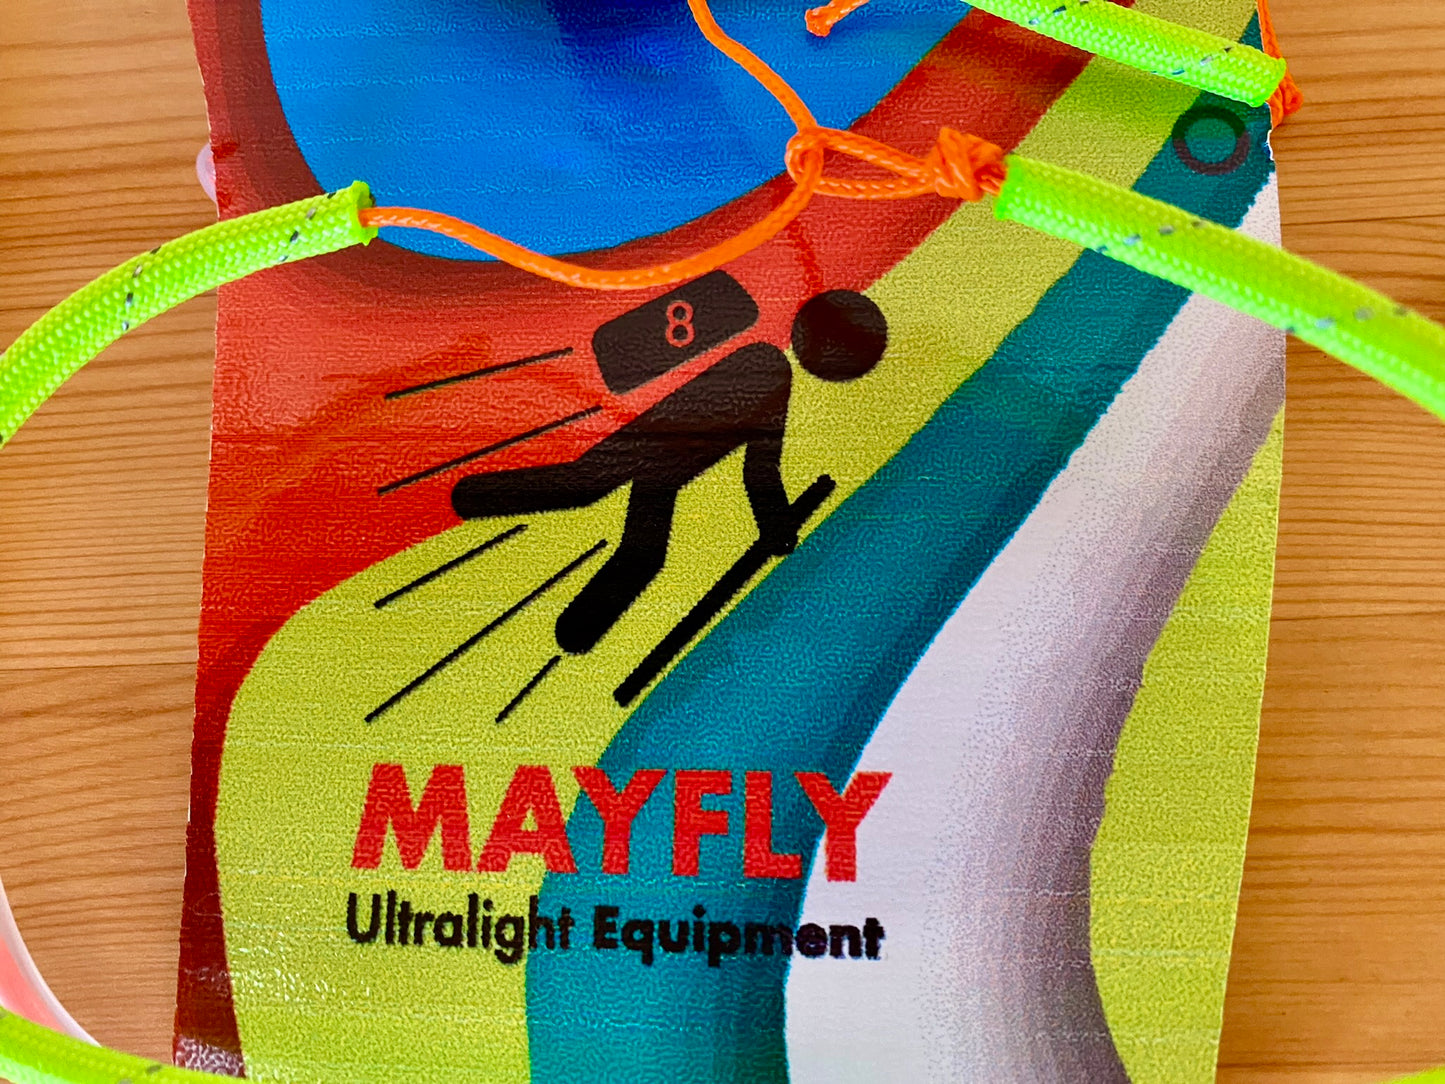 Mayfly Ultralight Equipment / the Imago